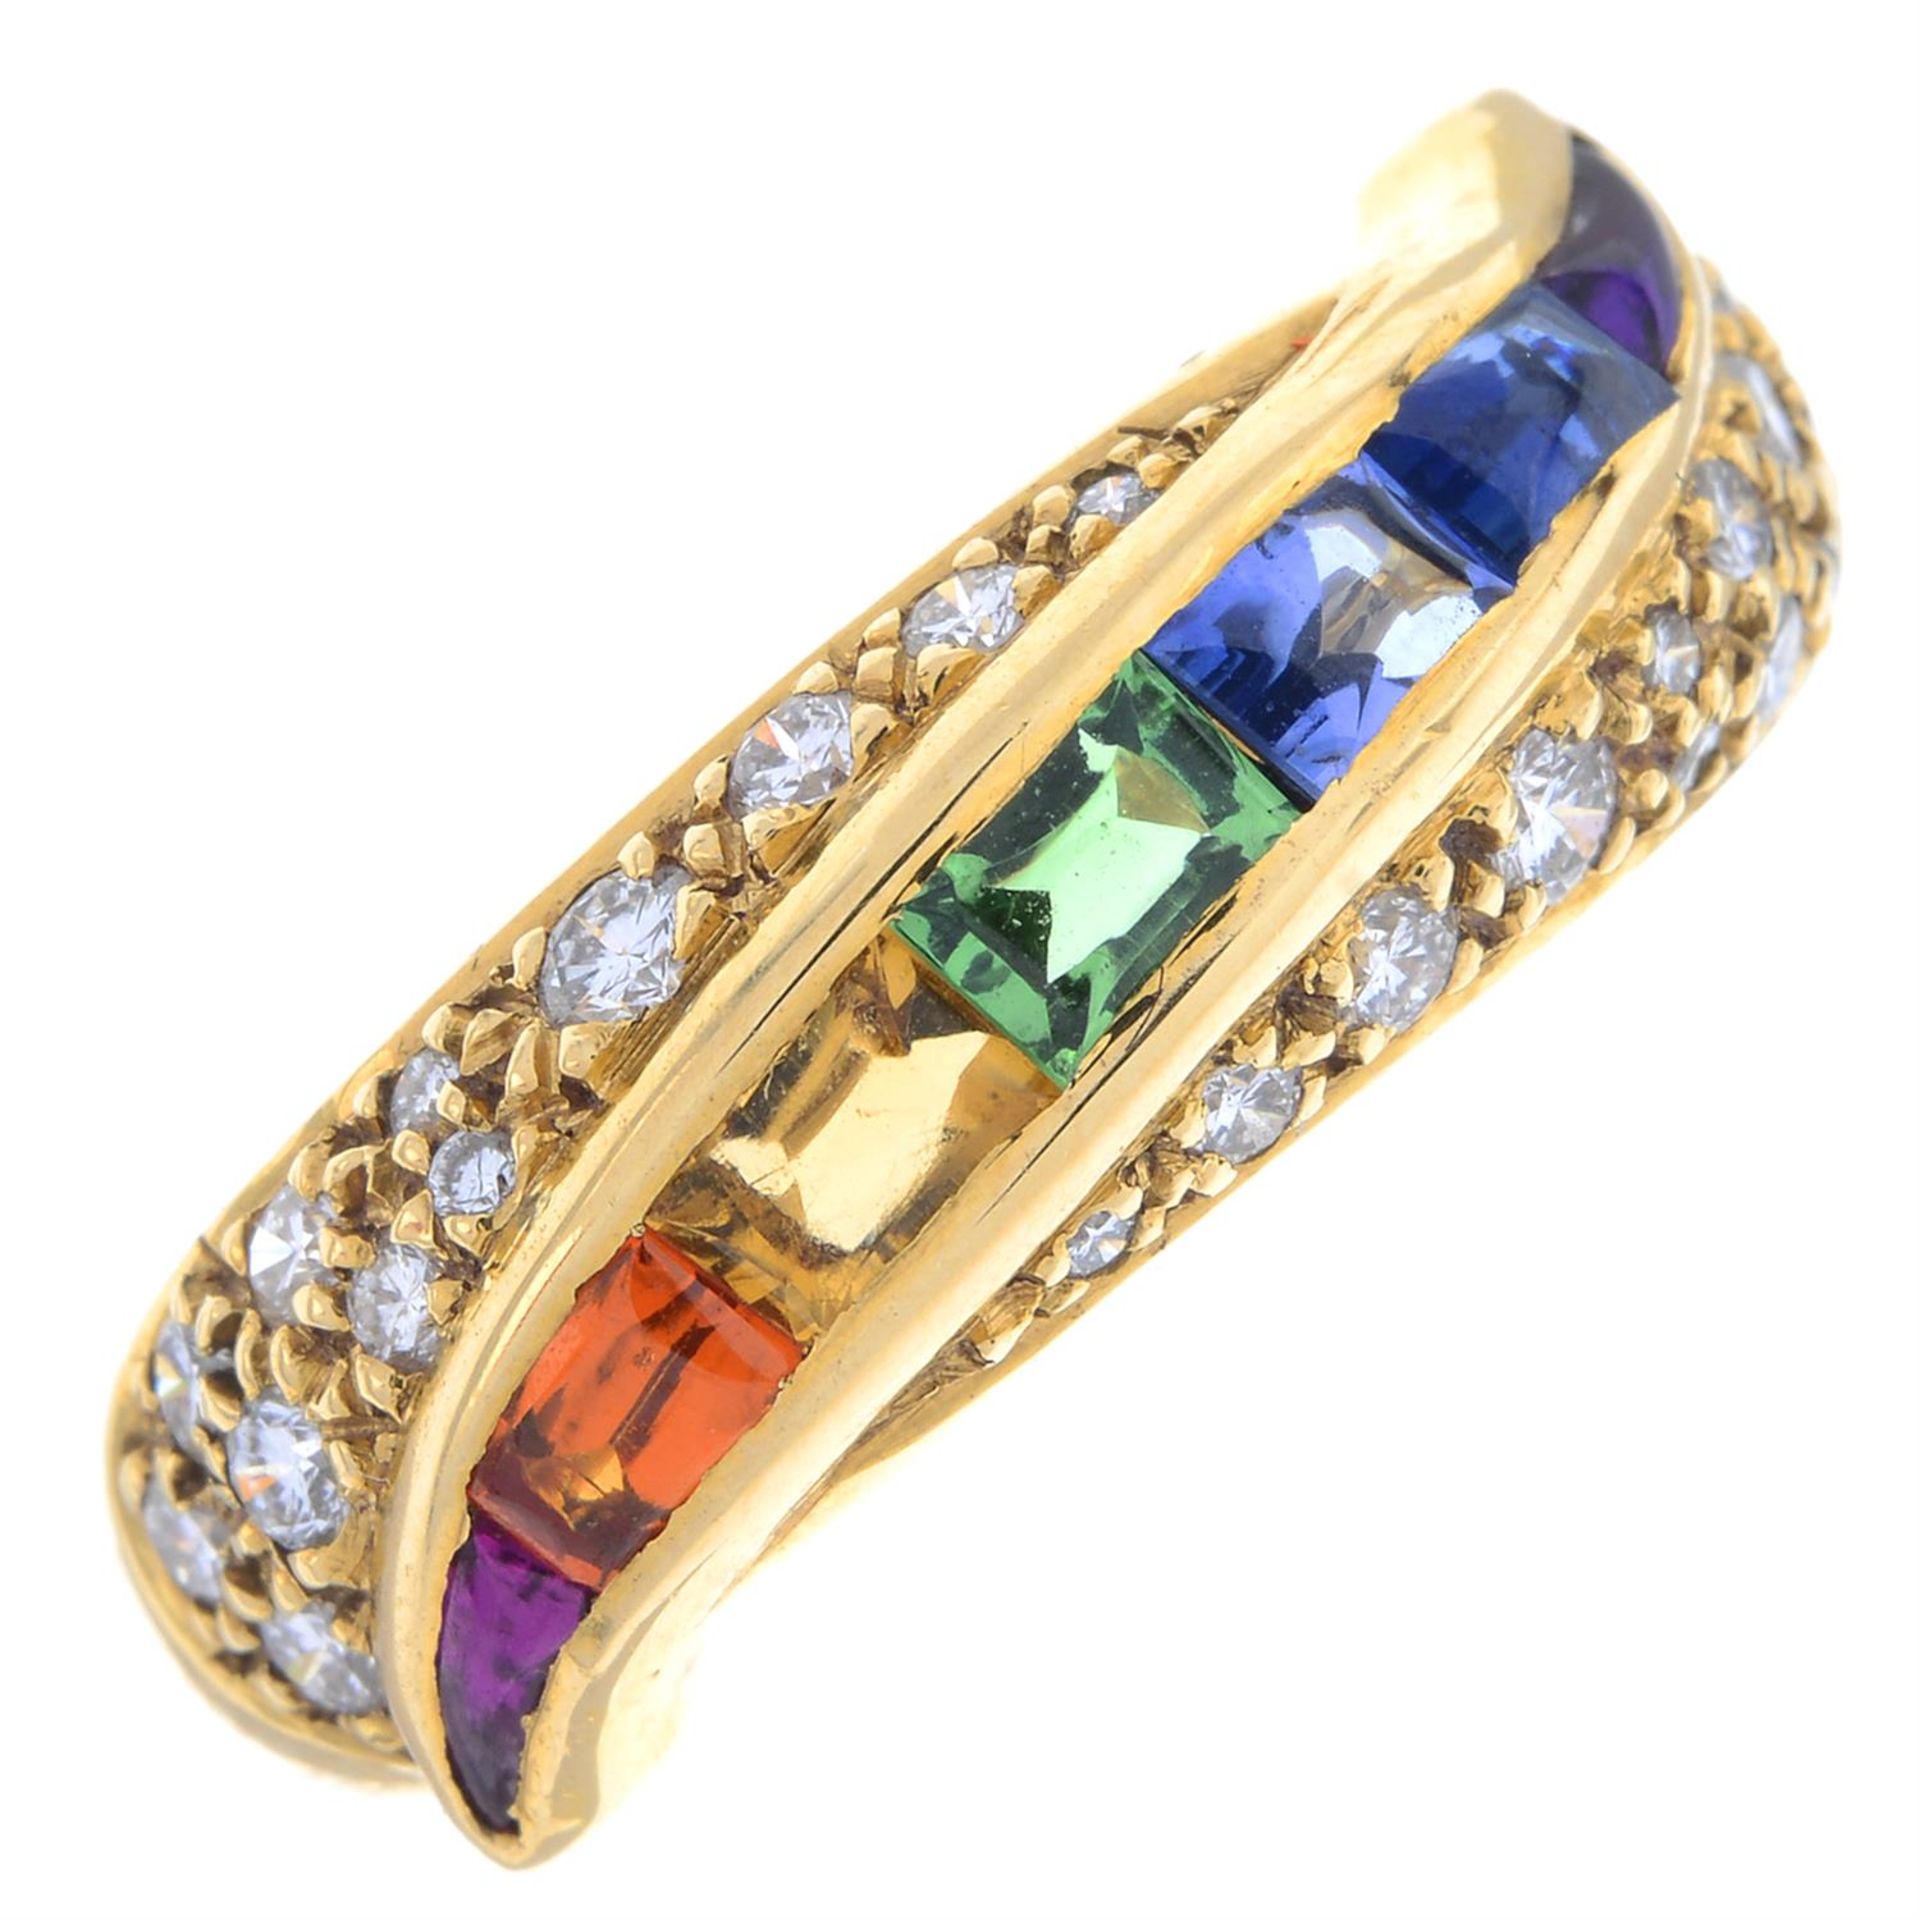 18ct gold vari-hue sapphire & diamond ring - Image 2 of 4